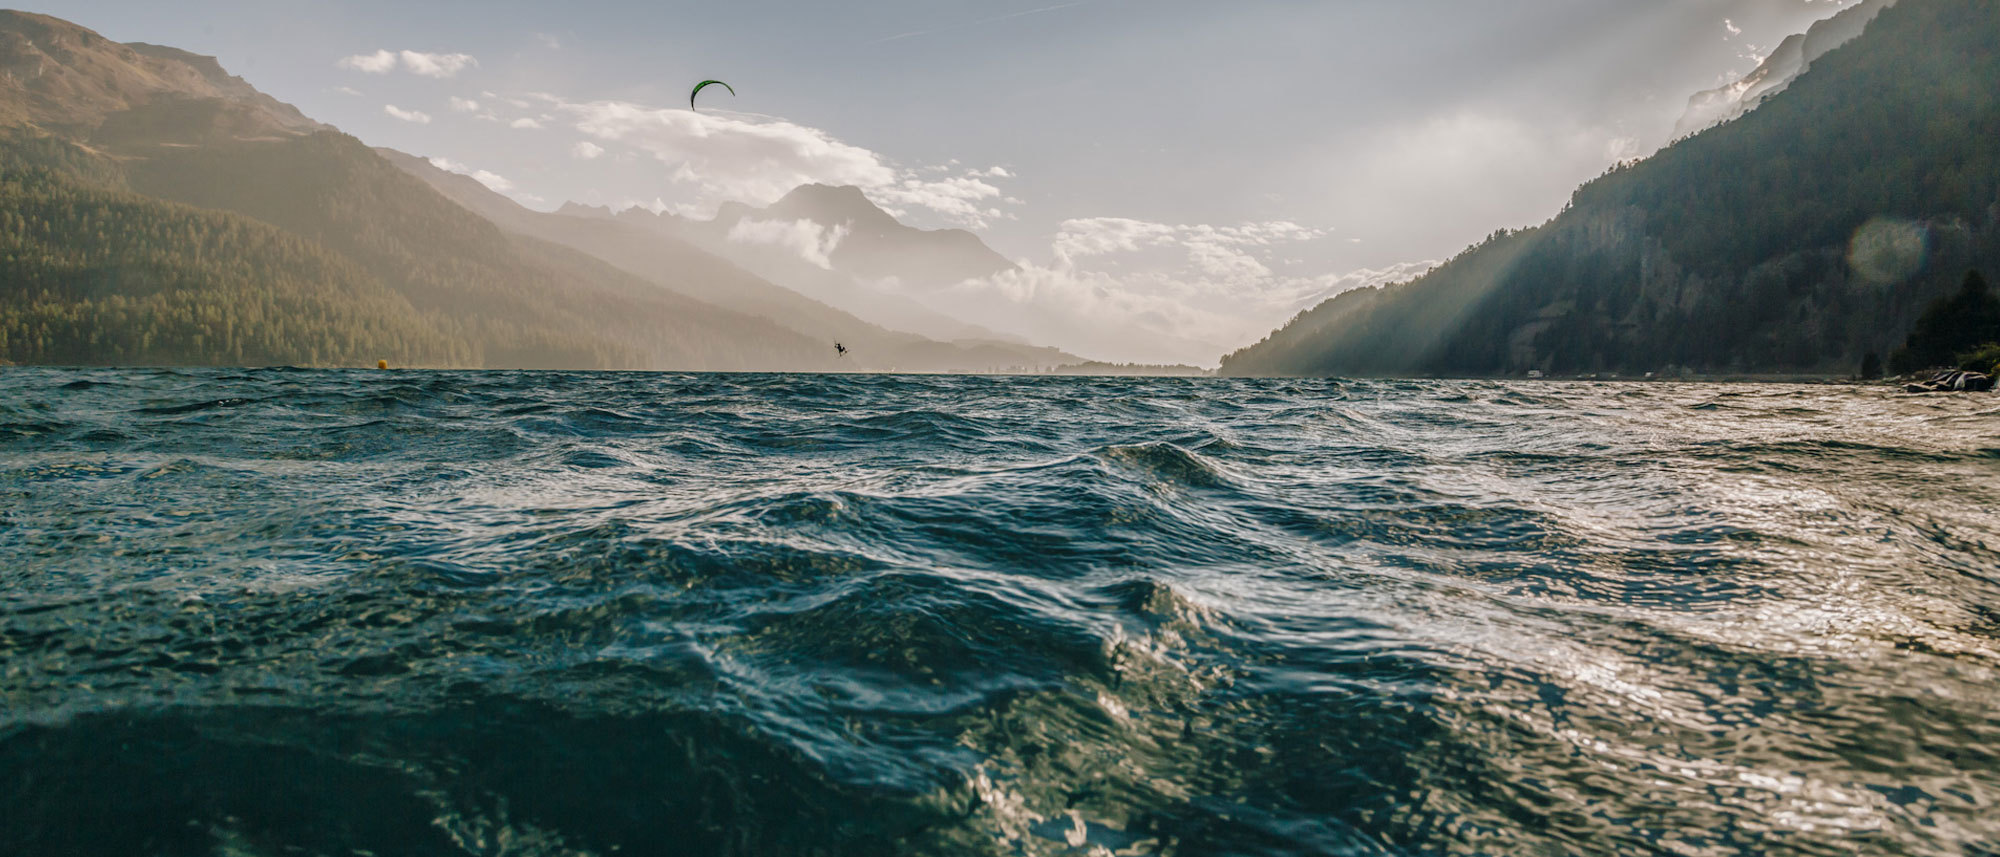 Swiss Kite Surf